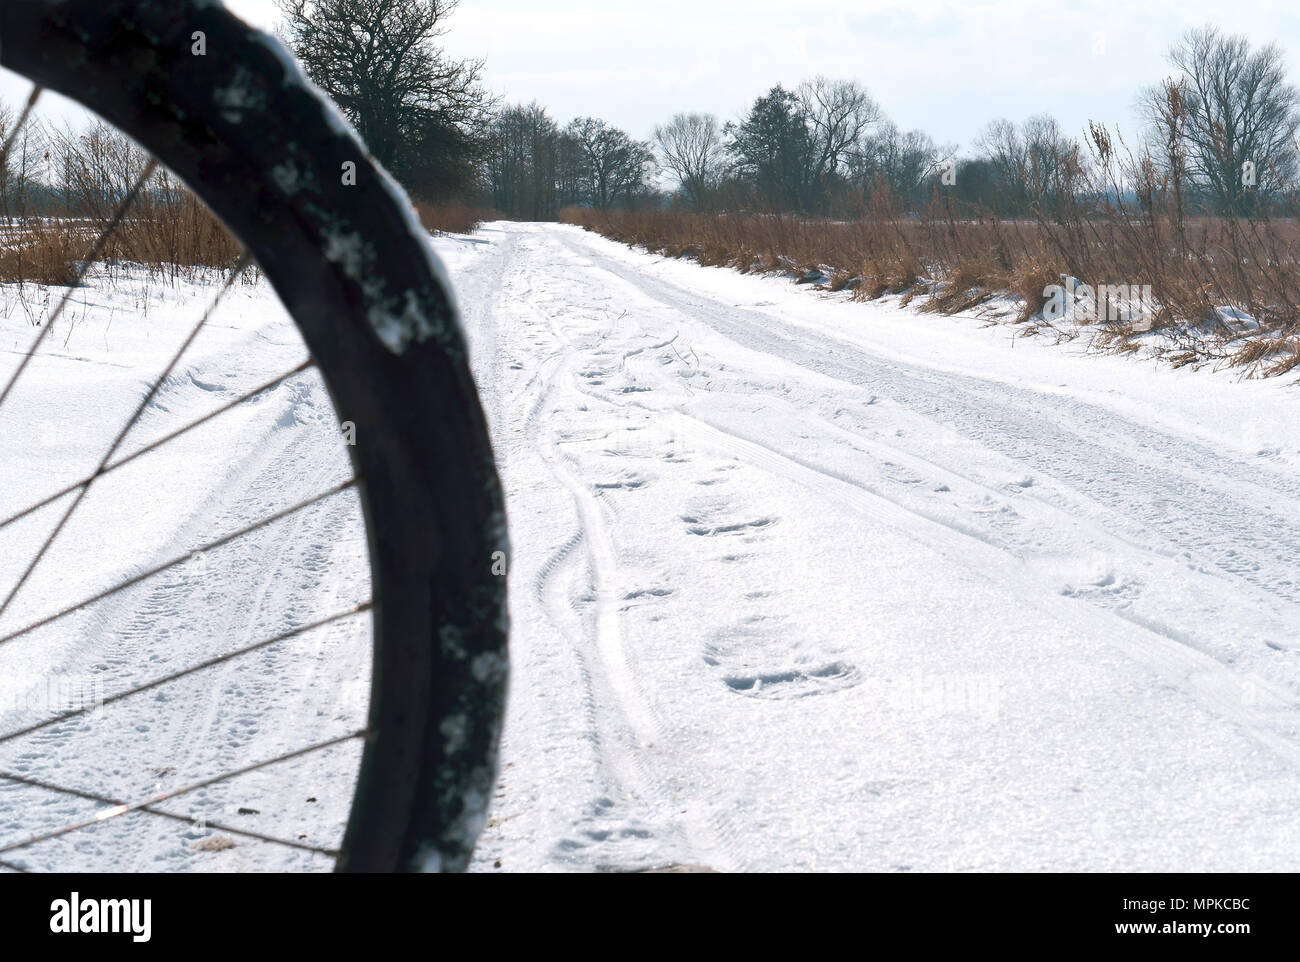 Fahrrad im Winter im Schnee, Fahrrad Rad im Schnee, ein Fahrrad im Winter im Schnee fahren Stockfoto